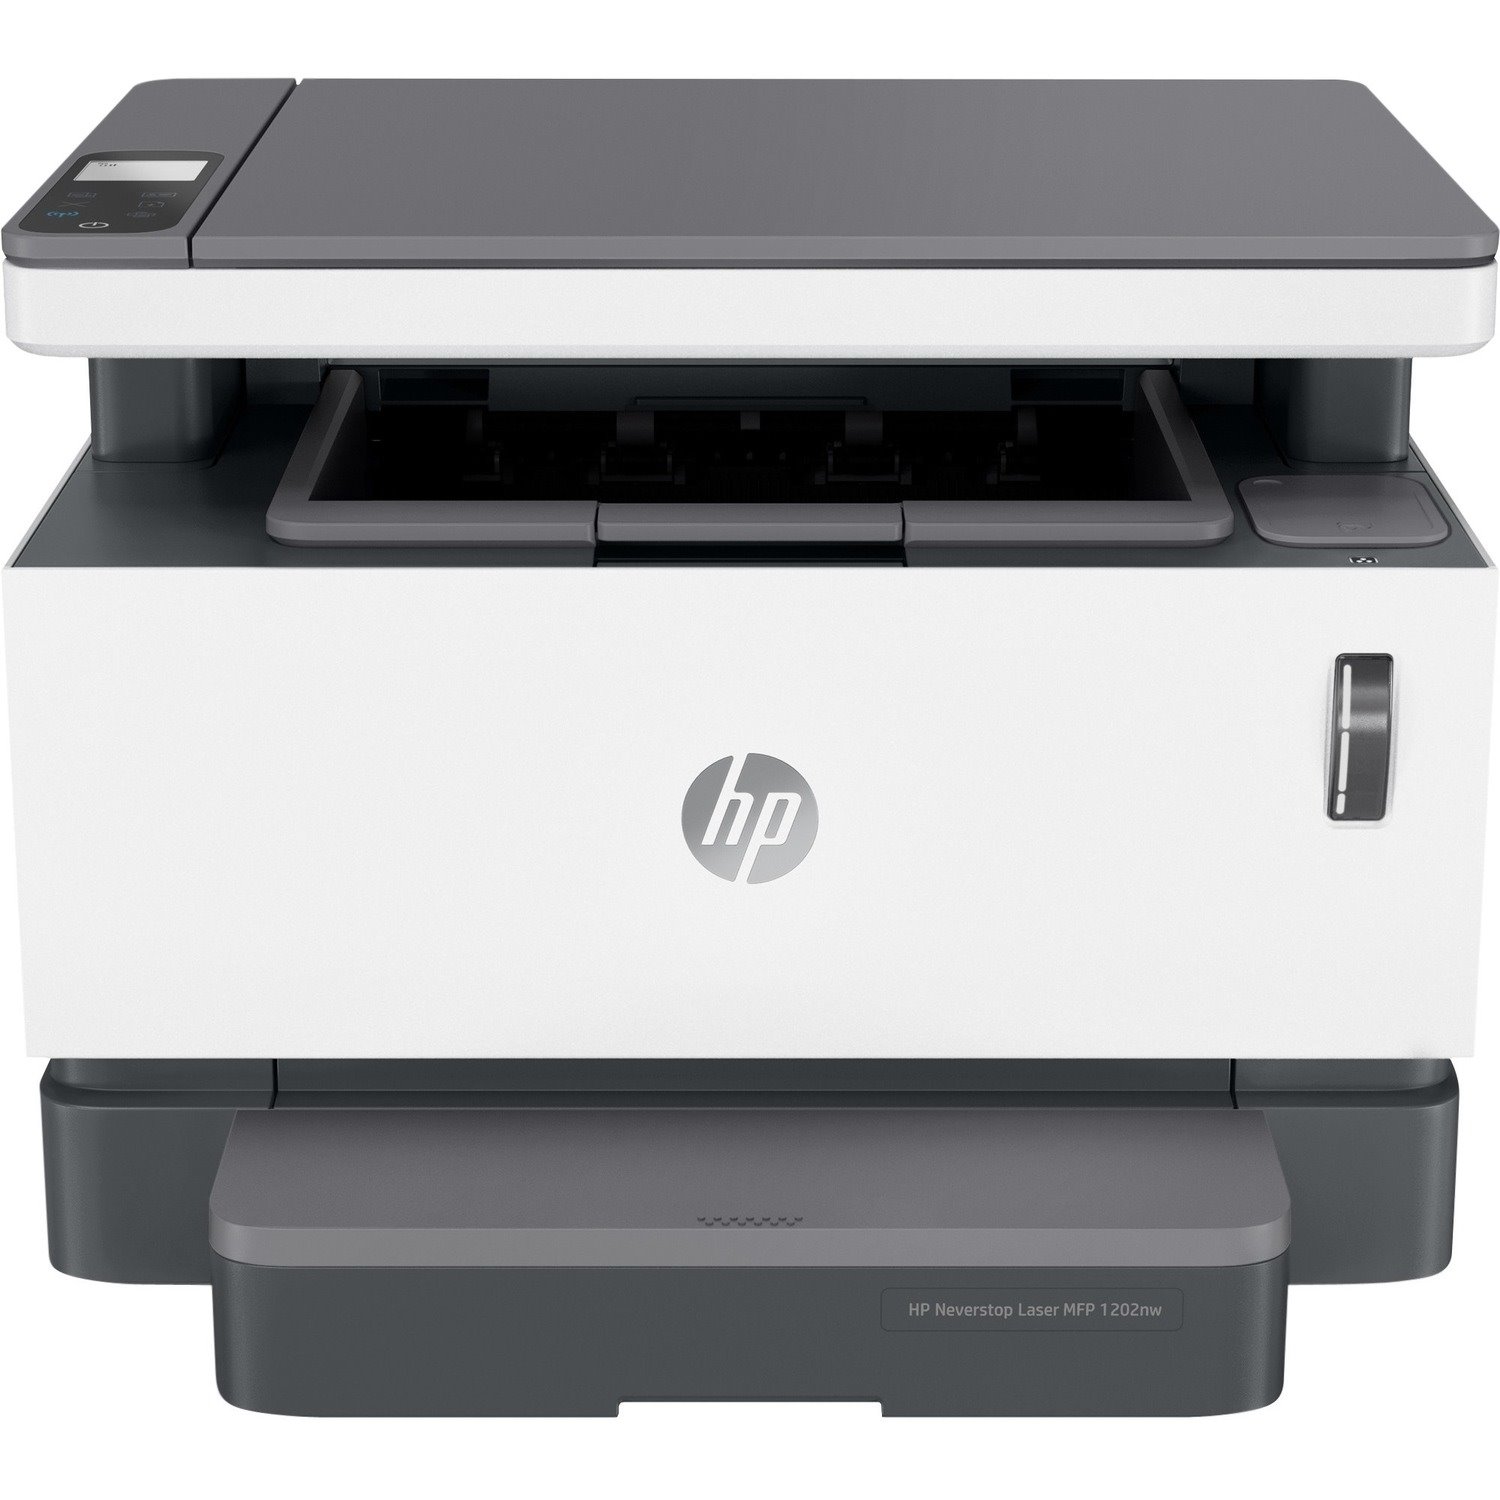 HP Neverstop 1202nw Laser Multifunction Printer-Monochrome-Copier/Scanner-21 ppm Mono Print-600x600 dpi Print-Manual Duplex Print-20000 Pages-150 sheets Input-600 dpi Optical Scan-Wireless LAN-Apple AirPrint-Mopria-Wi-Fi Direct